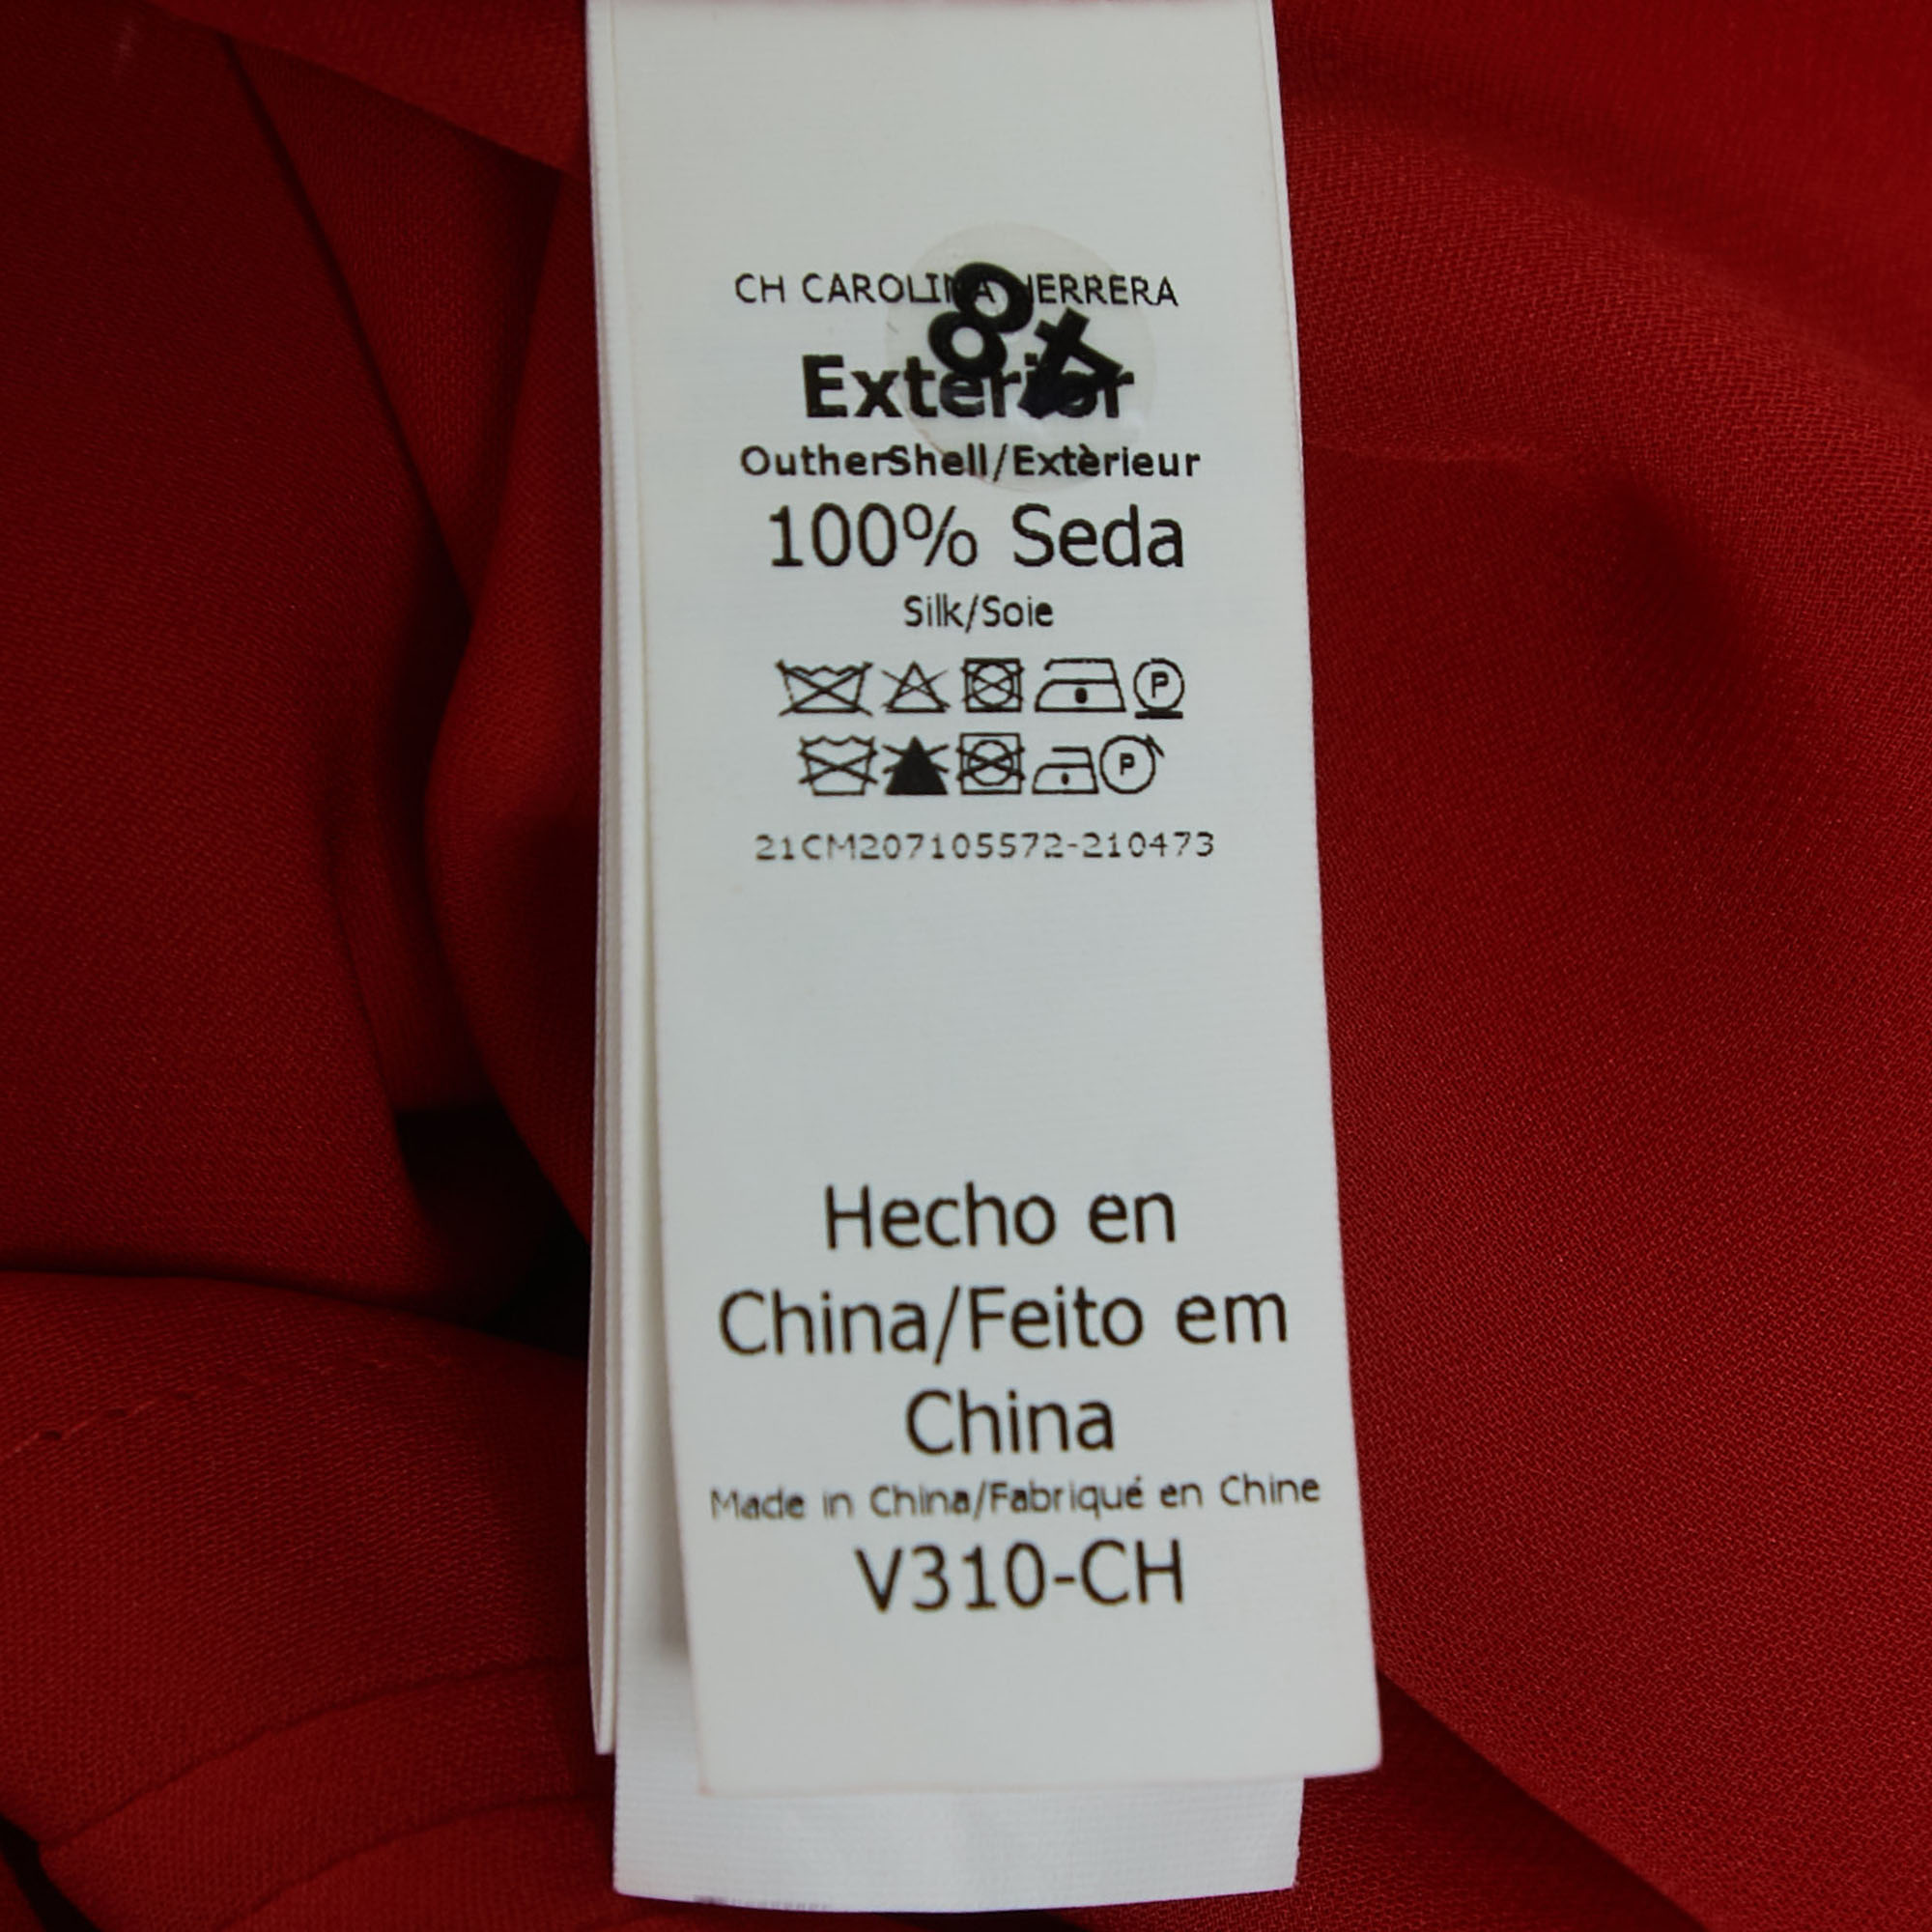 CH Carolina Herrera Red Silk Top S